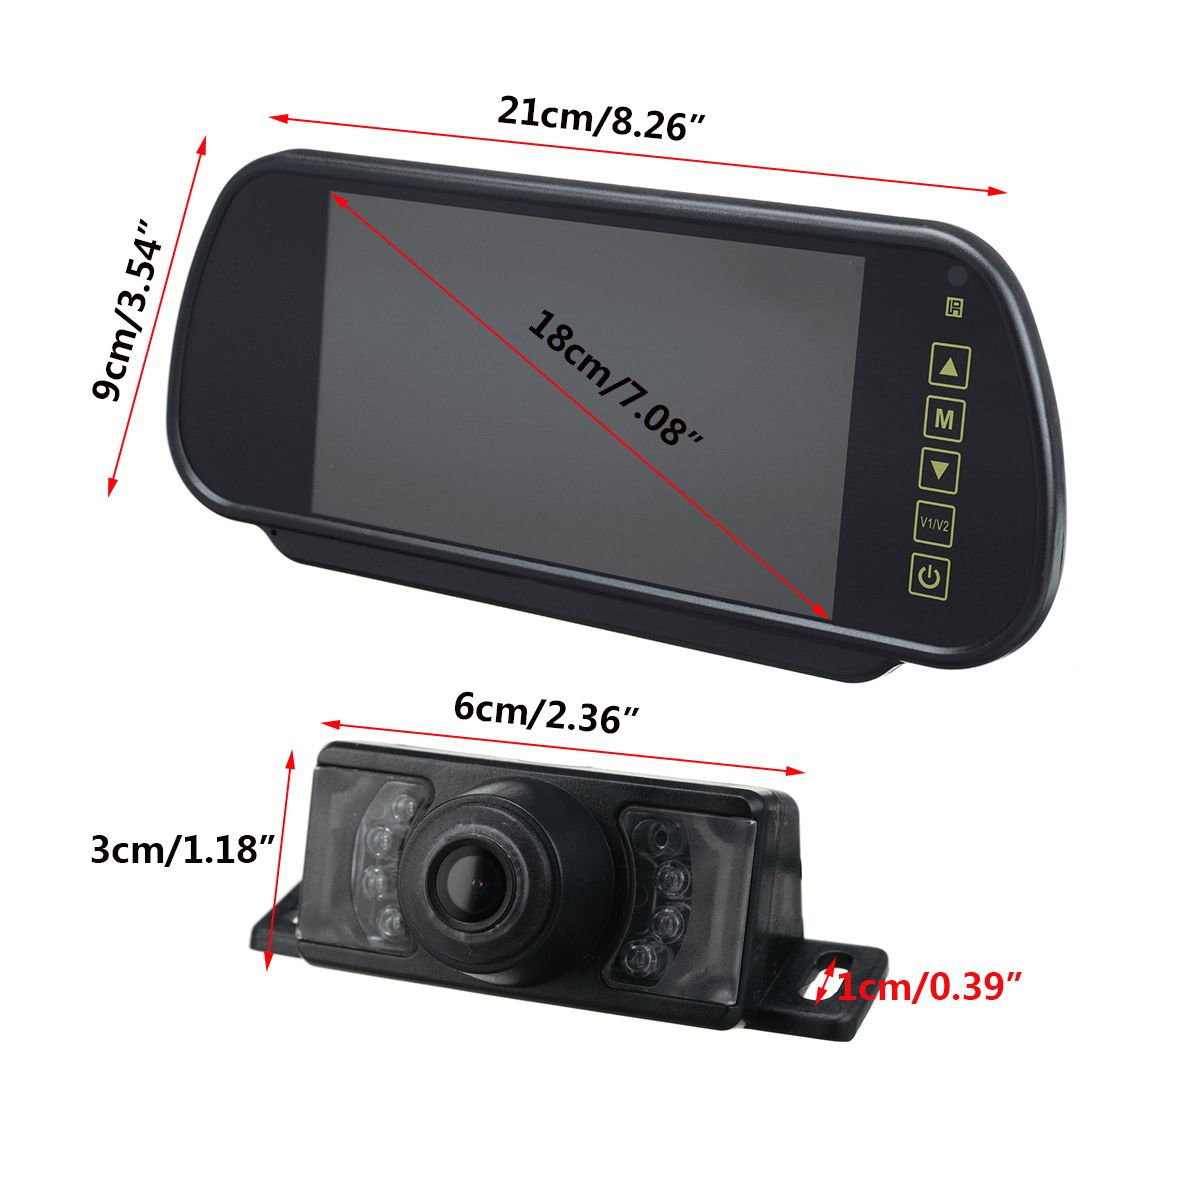 Wireless-7Inch-LCD-Mirror-Monitor-Car-Rear-View-IR-Reversing-Camera-Night-Vision-1769661